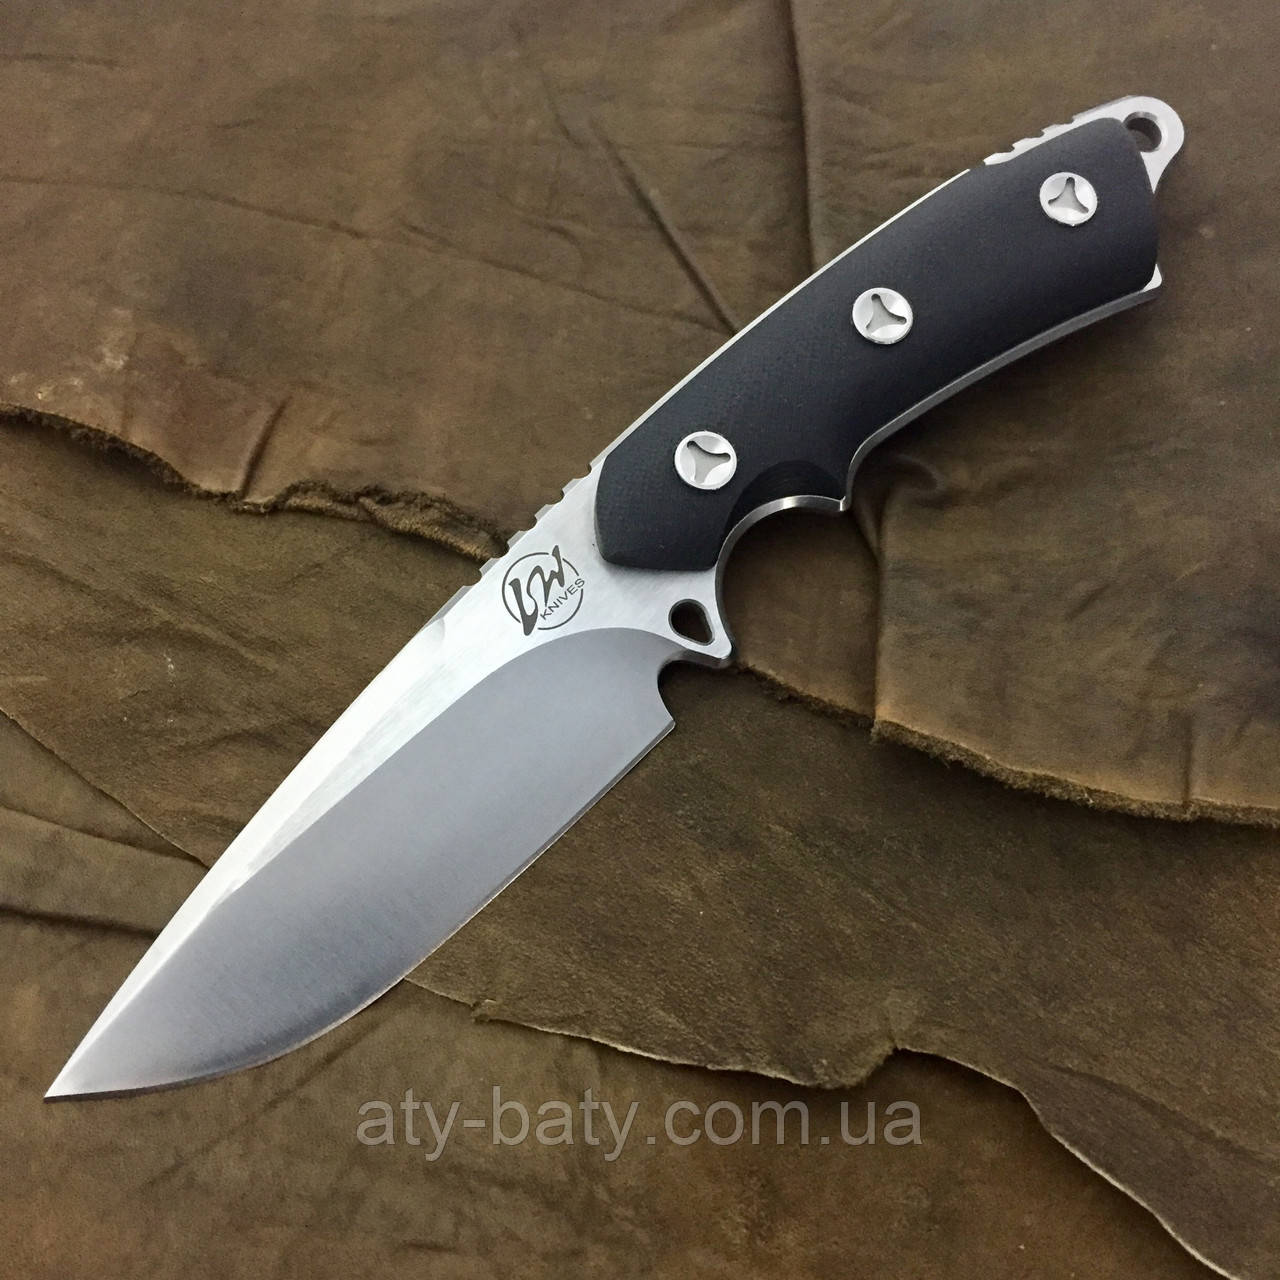 Ніж LW Knives Small Fixed Blade (білий)